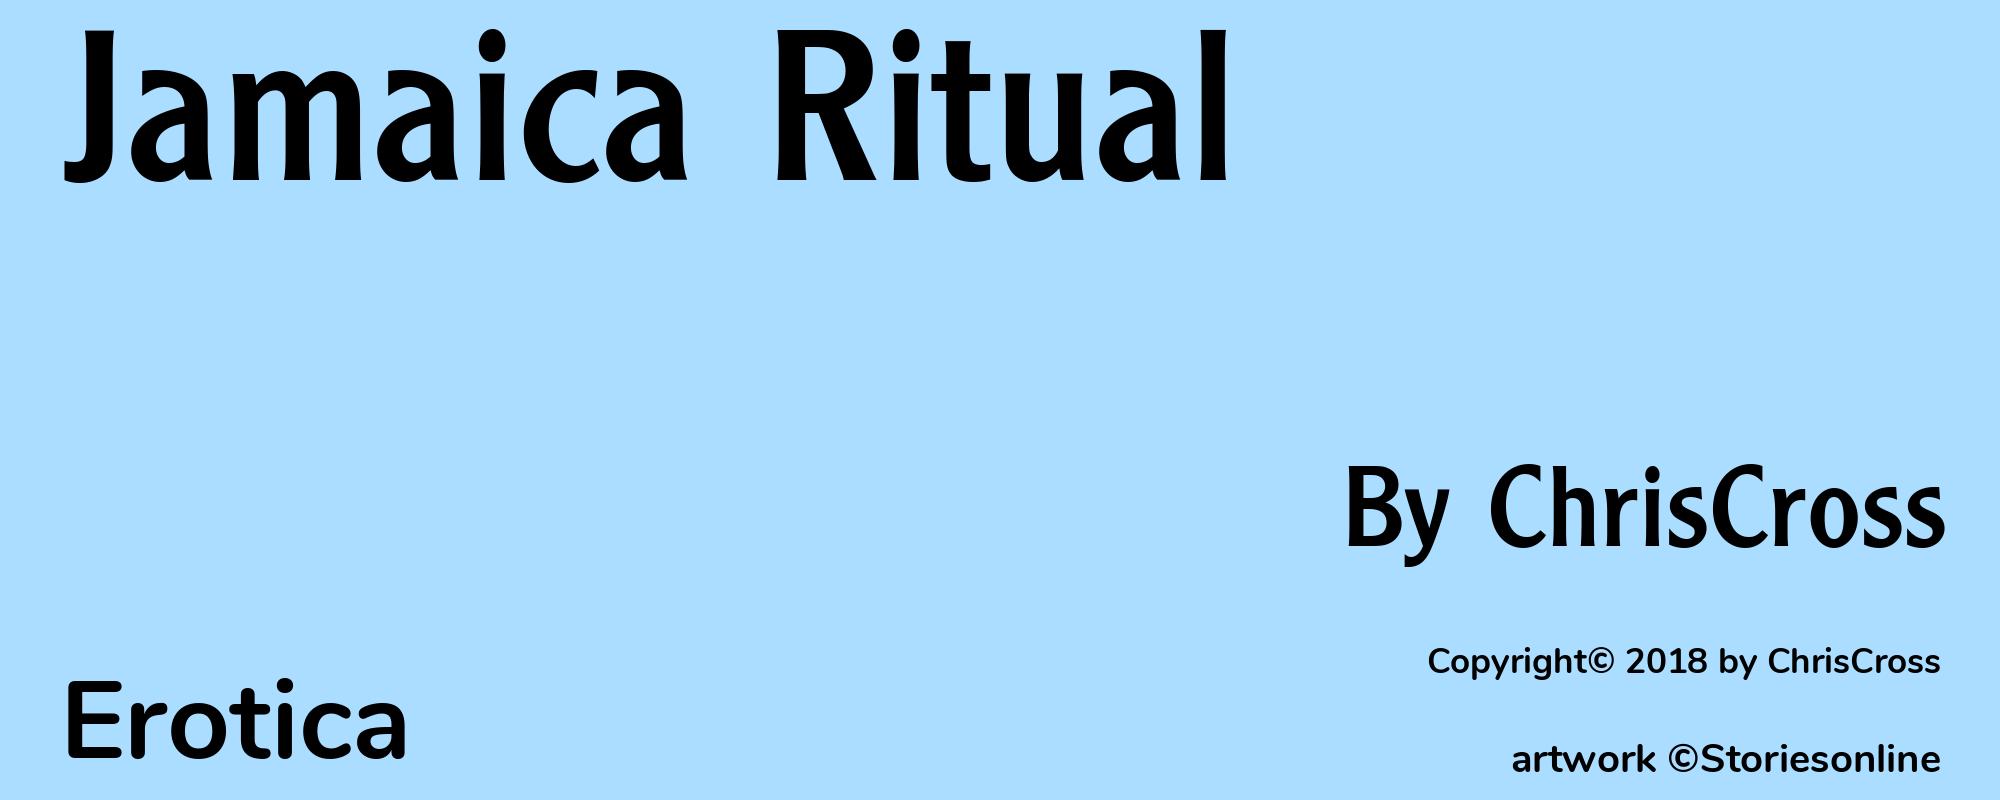 Jamaica Ritual - Cover